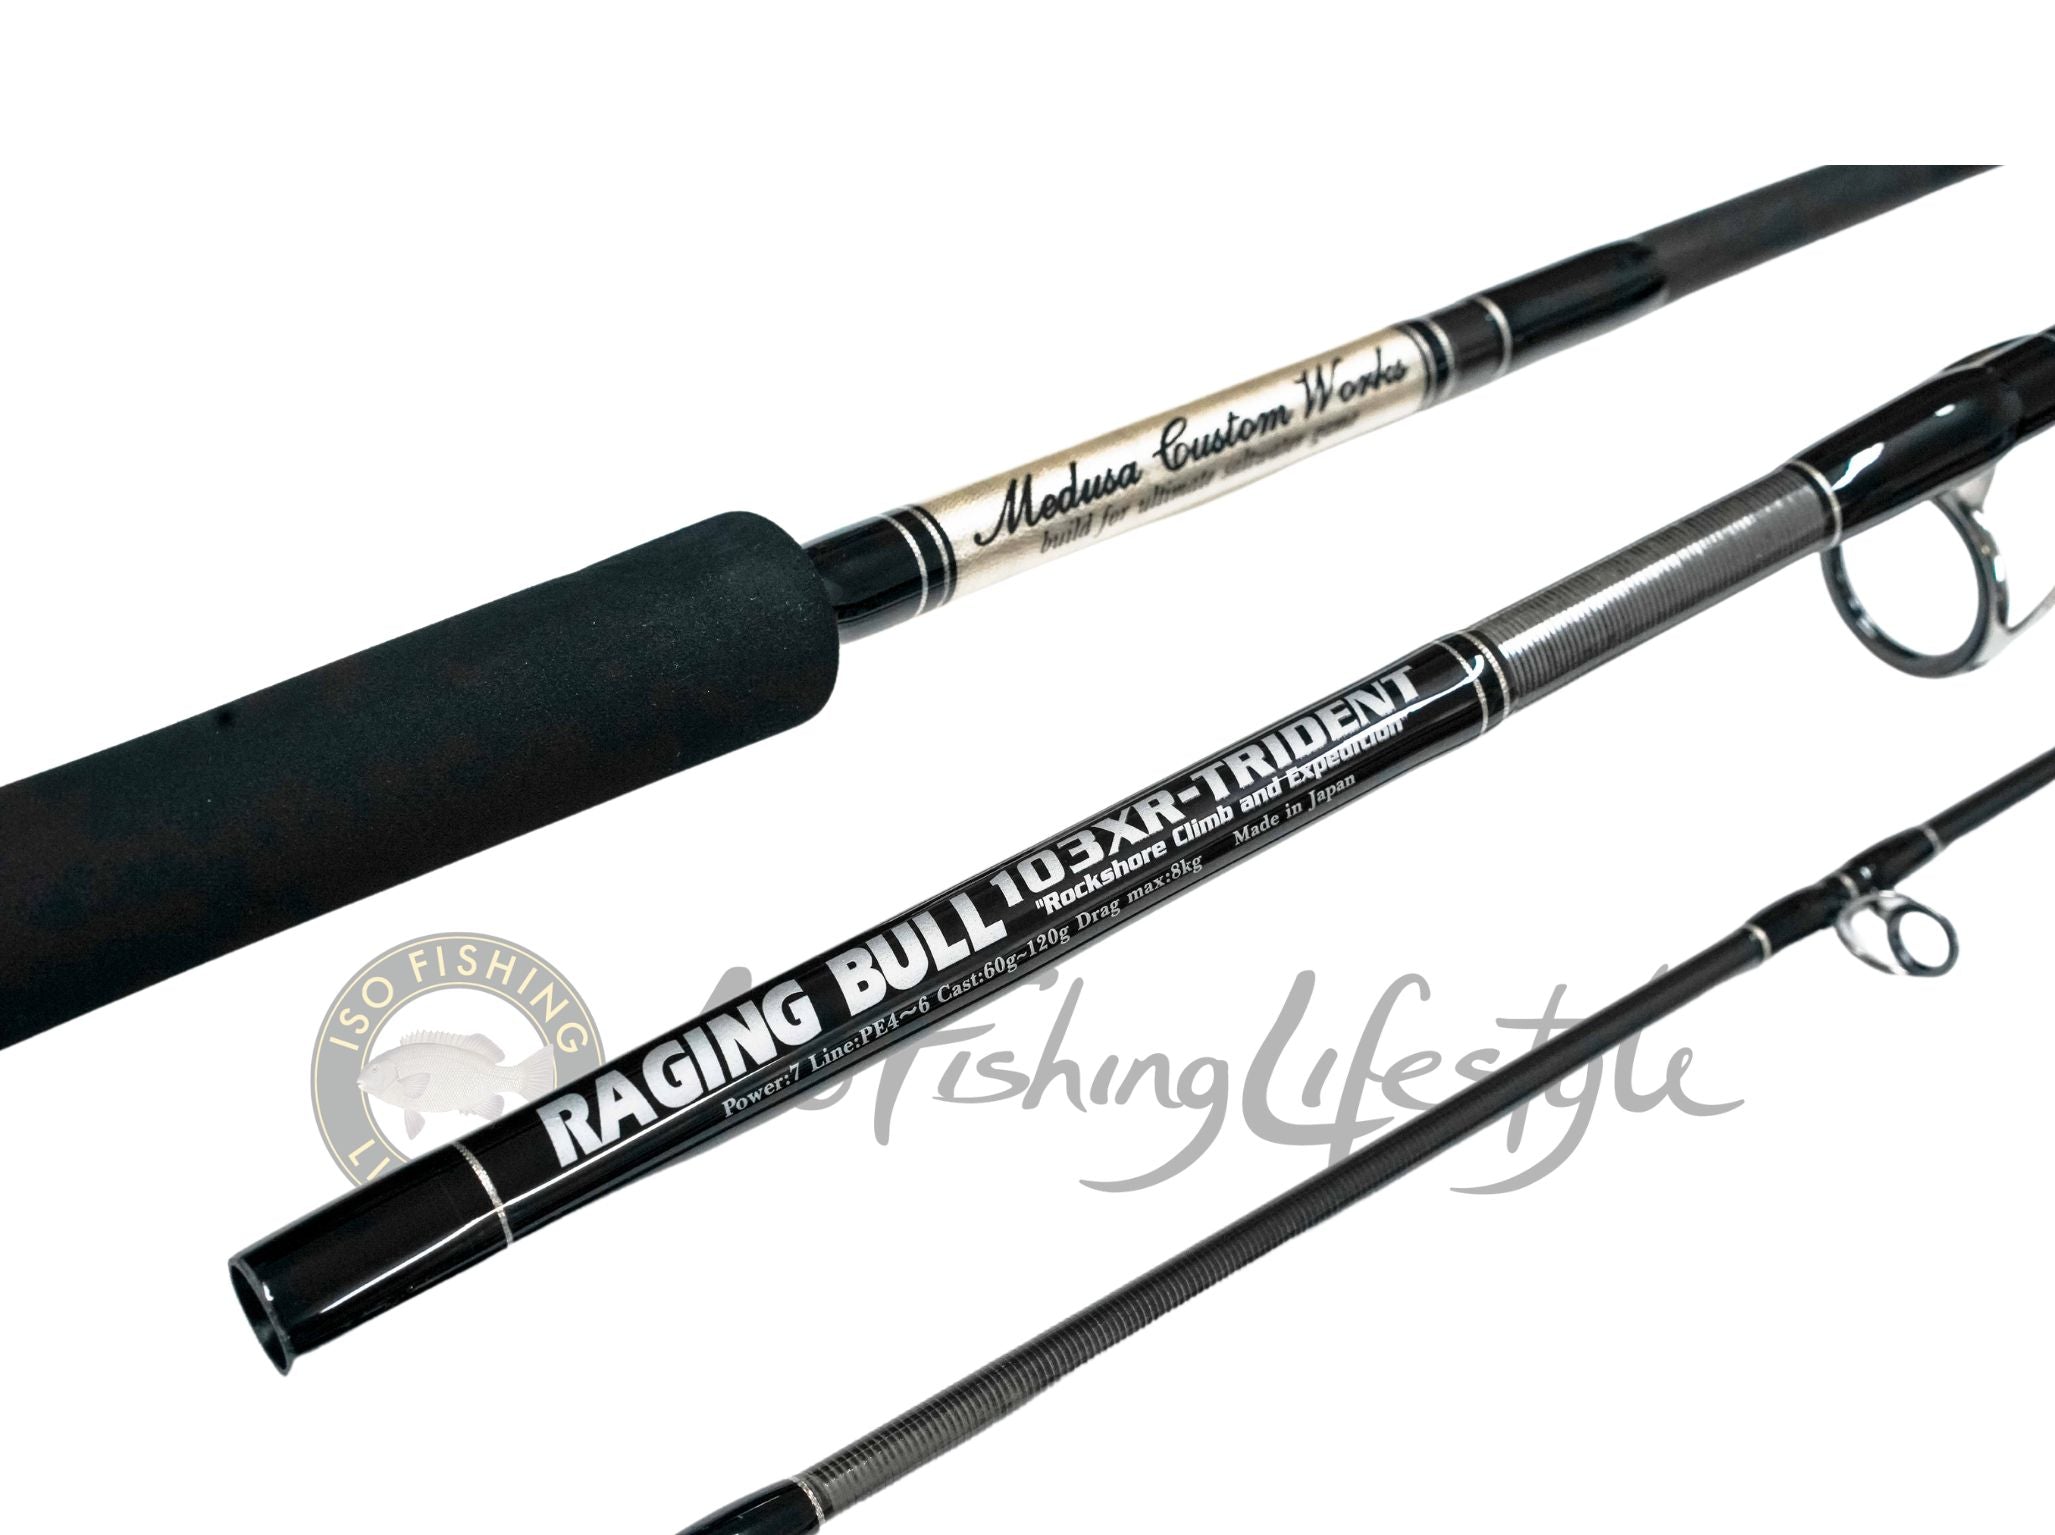 MC Works 2023 Raging Bull 103XR-Trident SP – Isofishinglifestyle